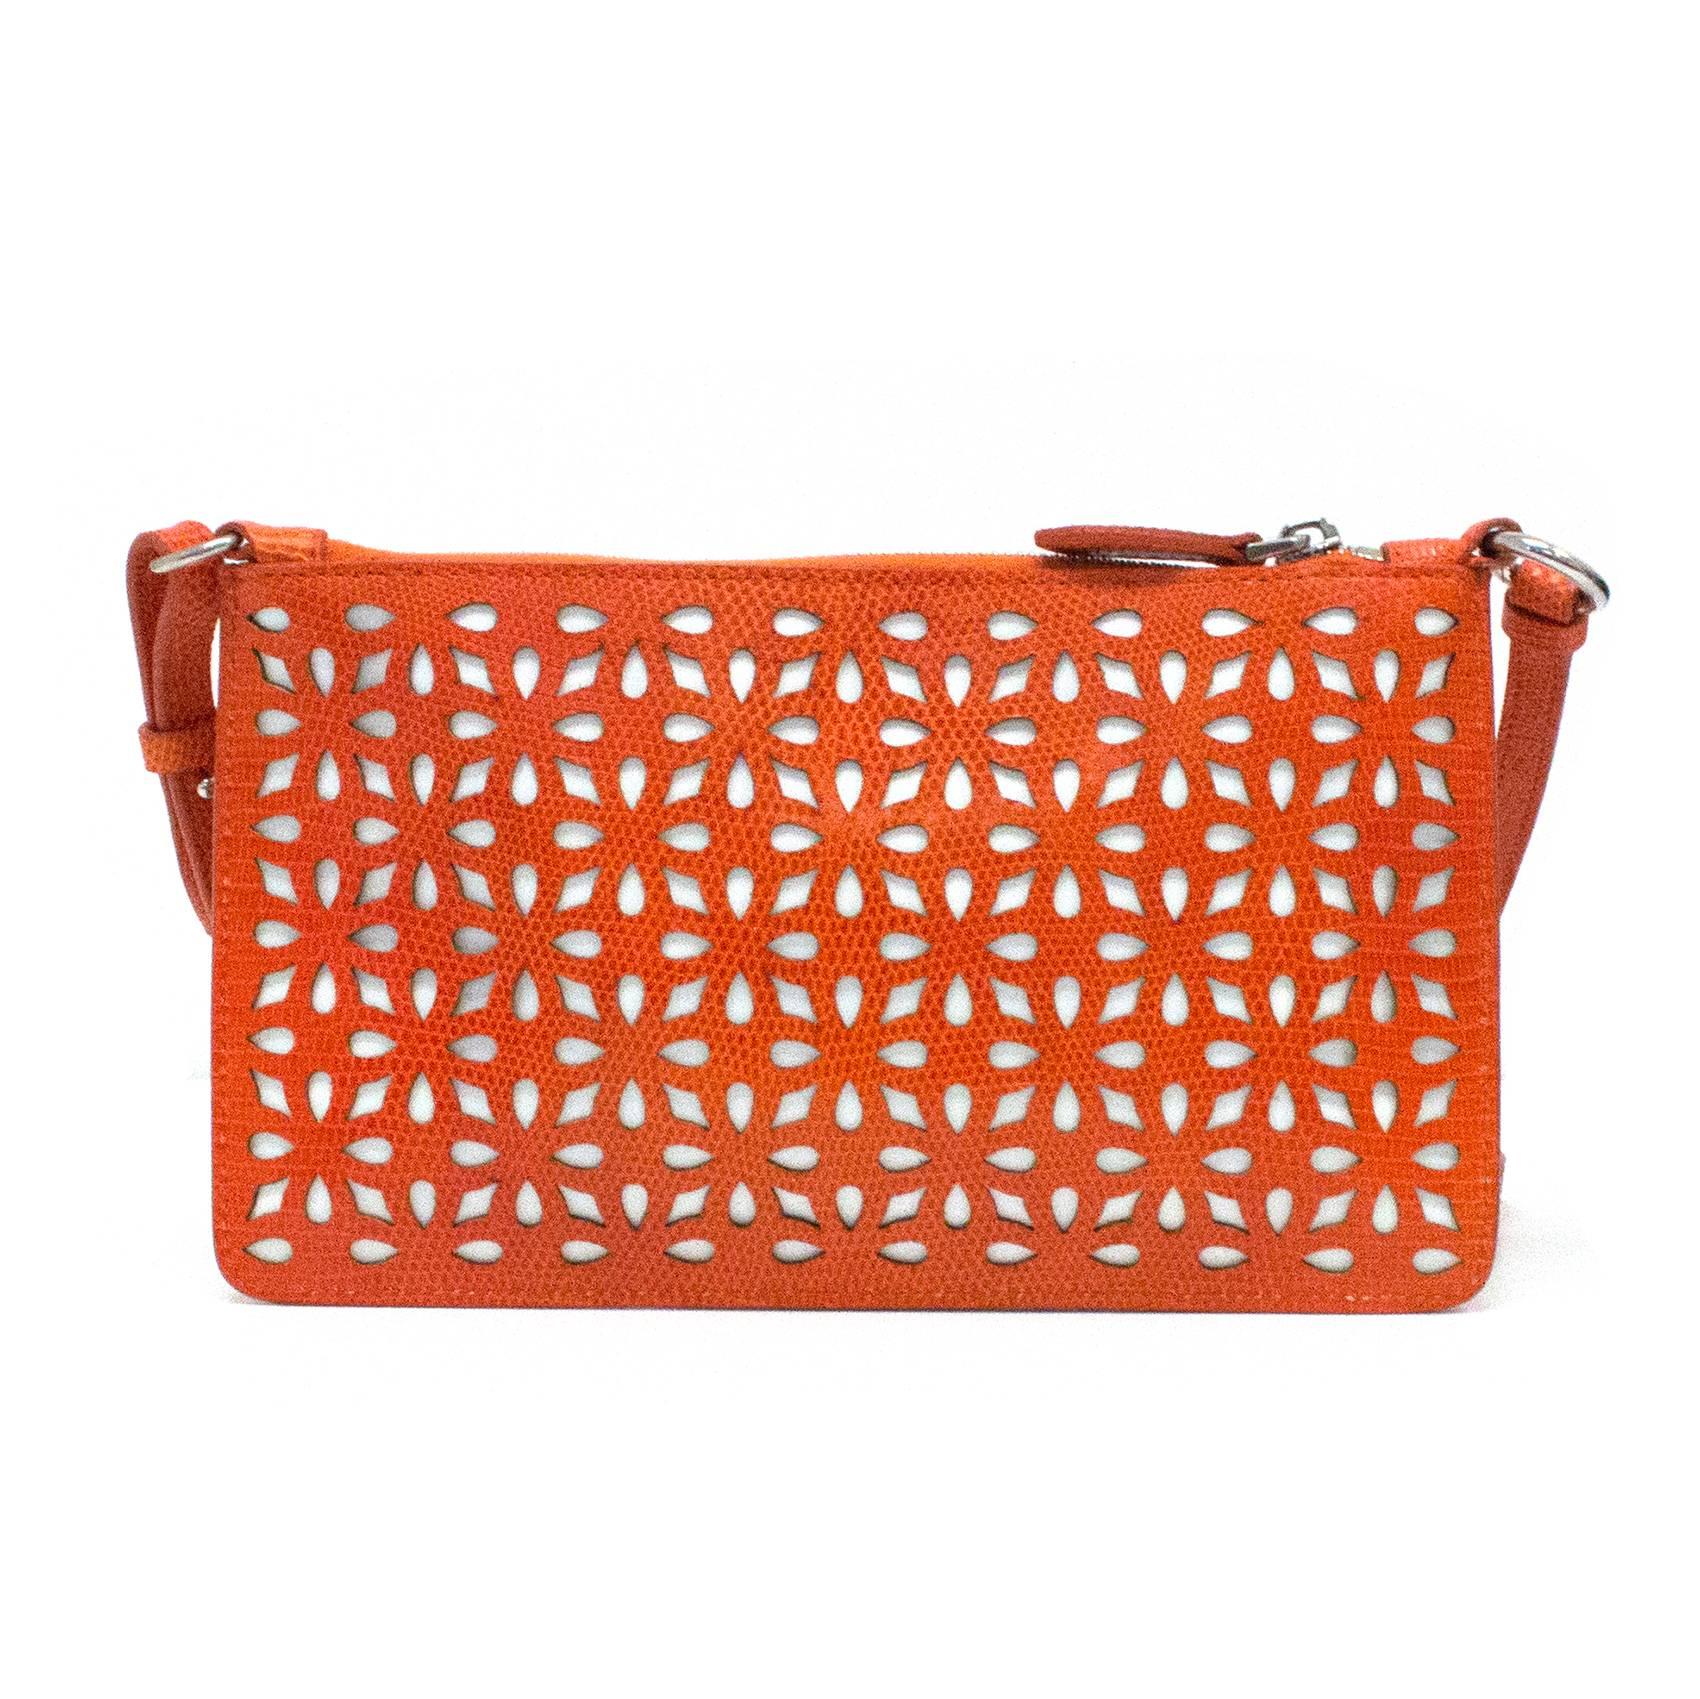 Alaia Orange Laser Cut Shoulder Bag In Excellent Condition For Sale In London, GB